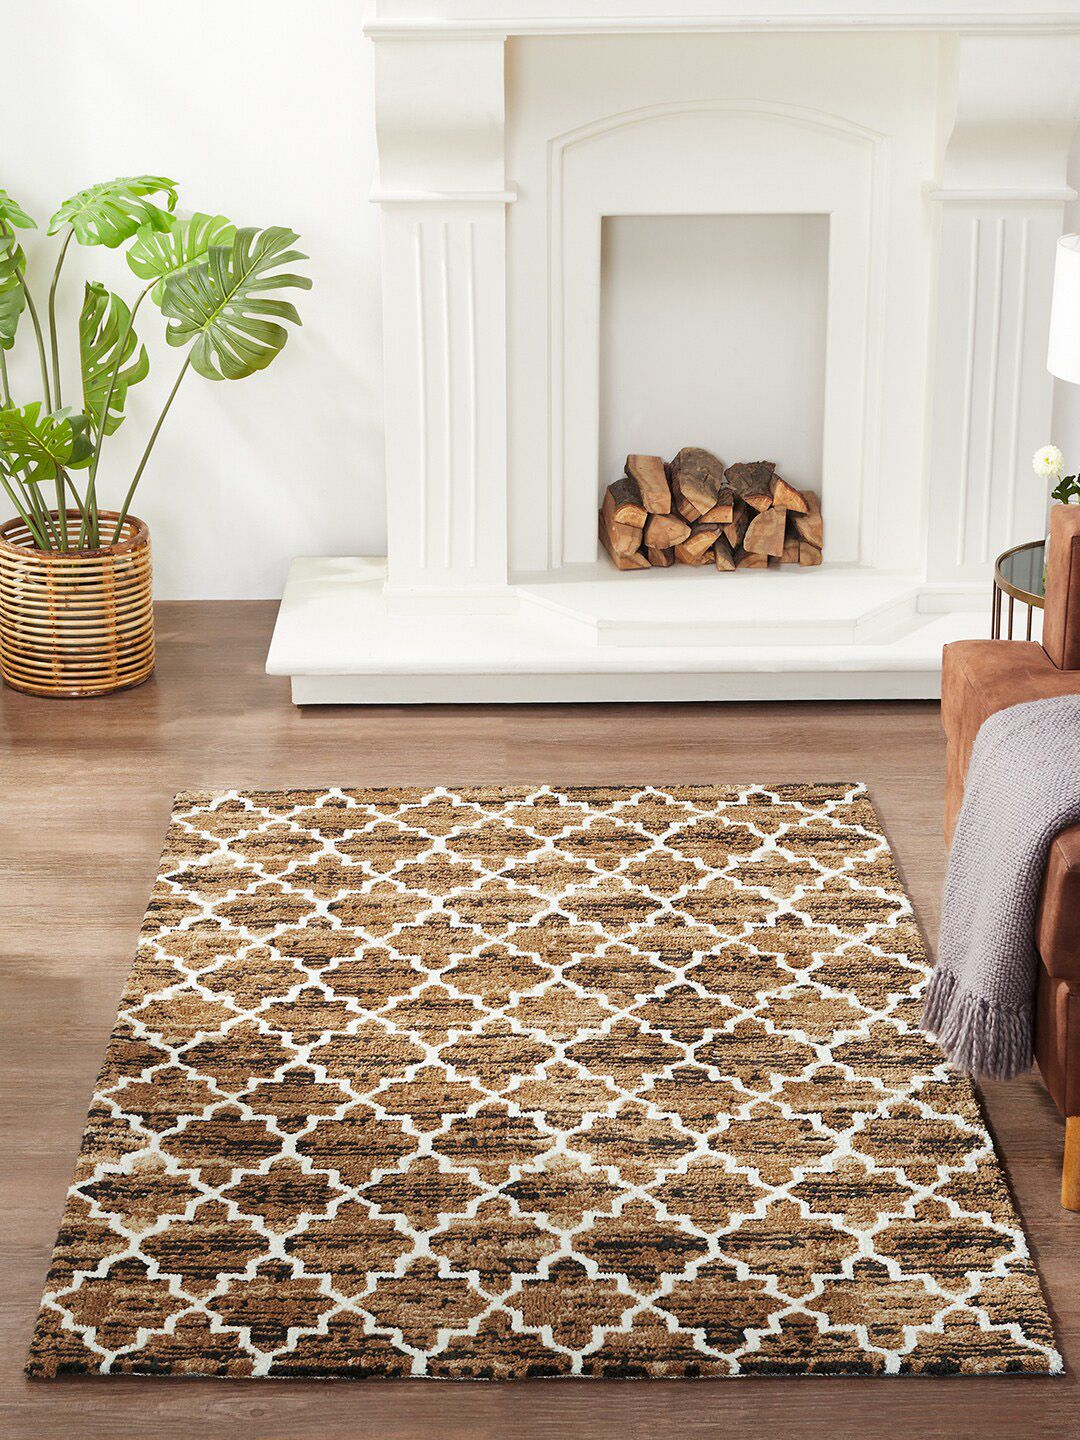 Pano Brown & White Geometric Printed Rectangular Carpet Price in India